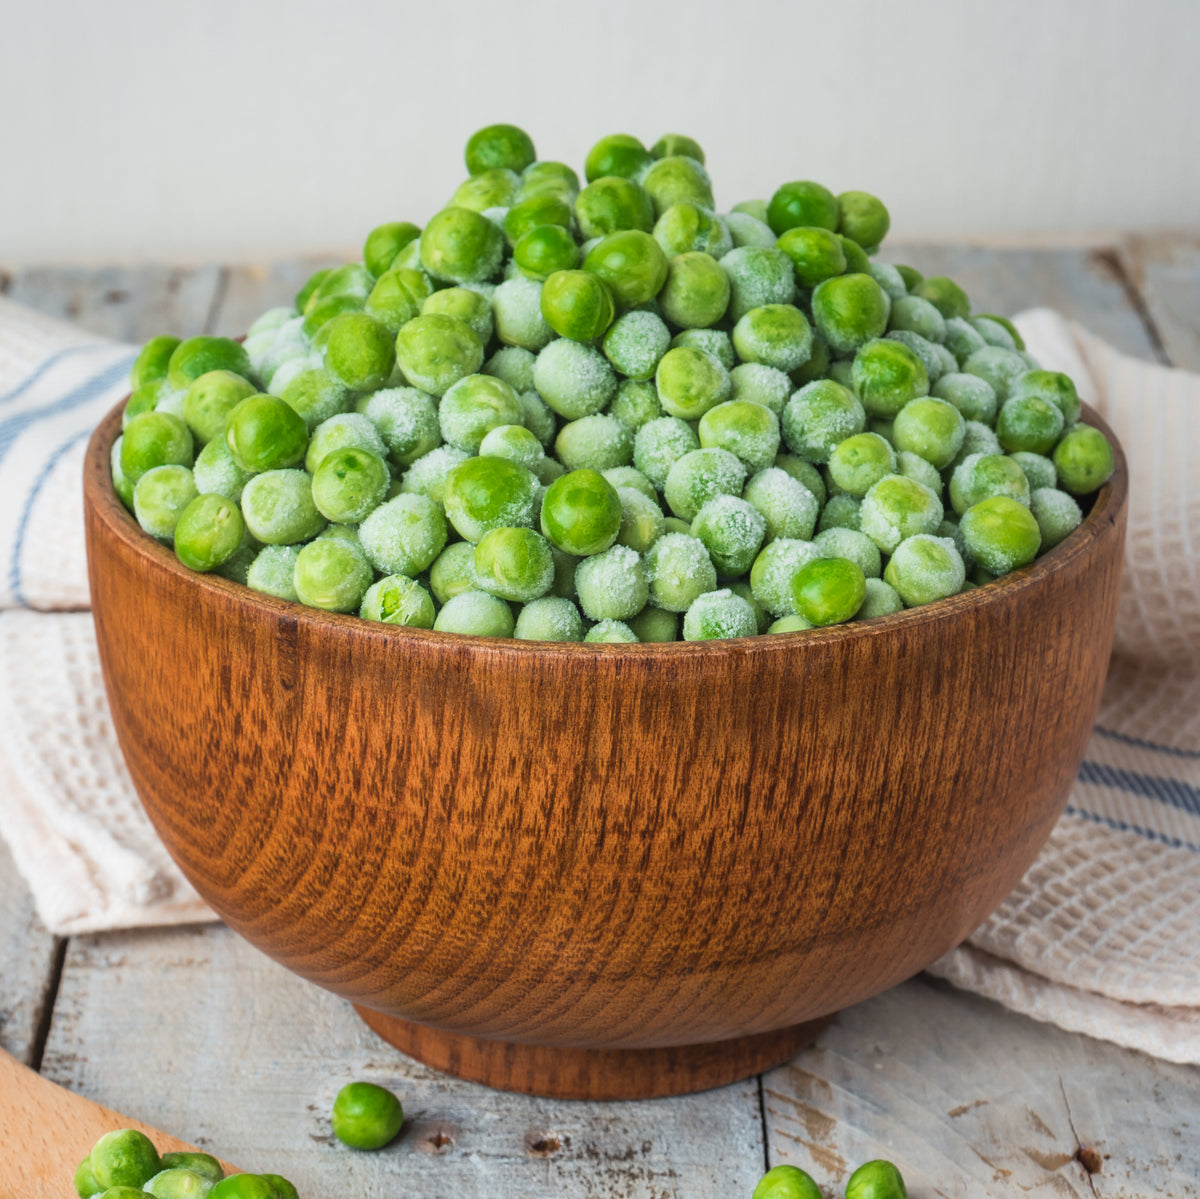 Certified Organic Frozen Peas from Spain (1kg-2.5kg) - Horizon Farms